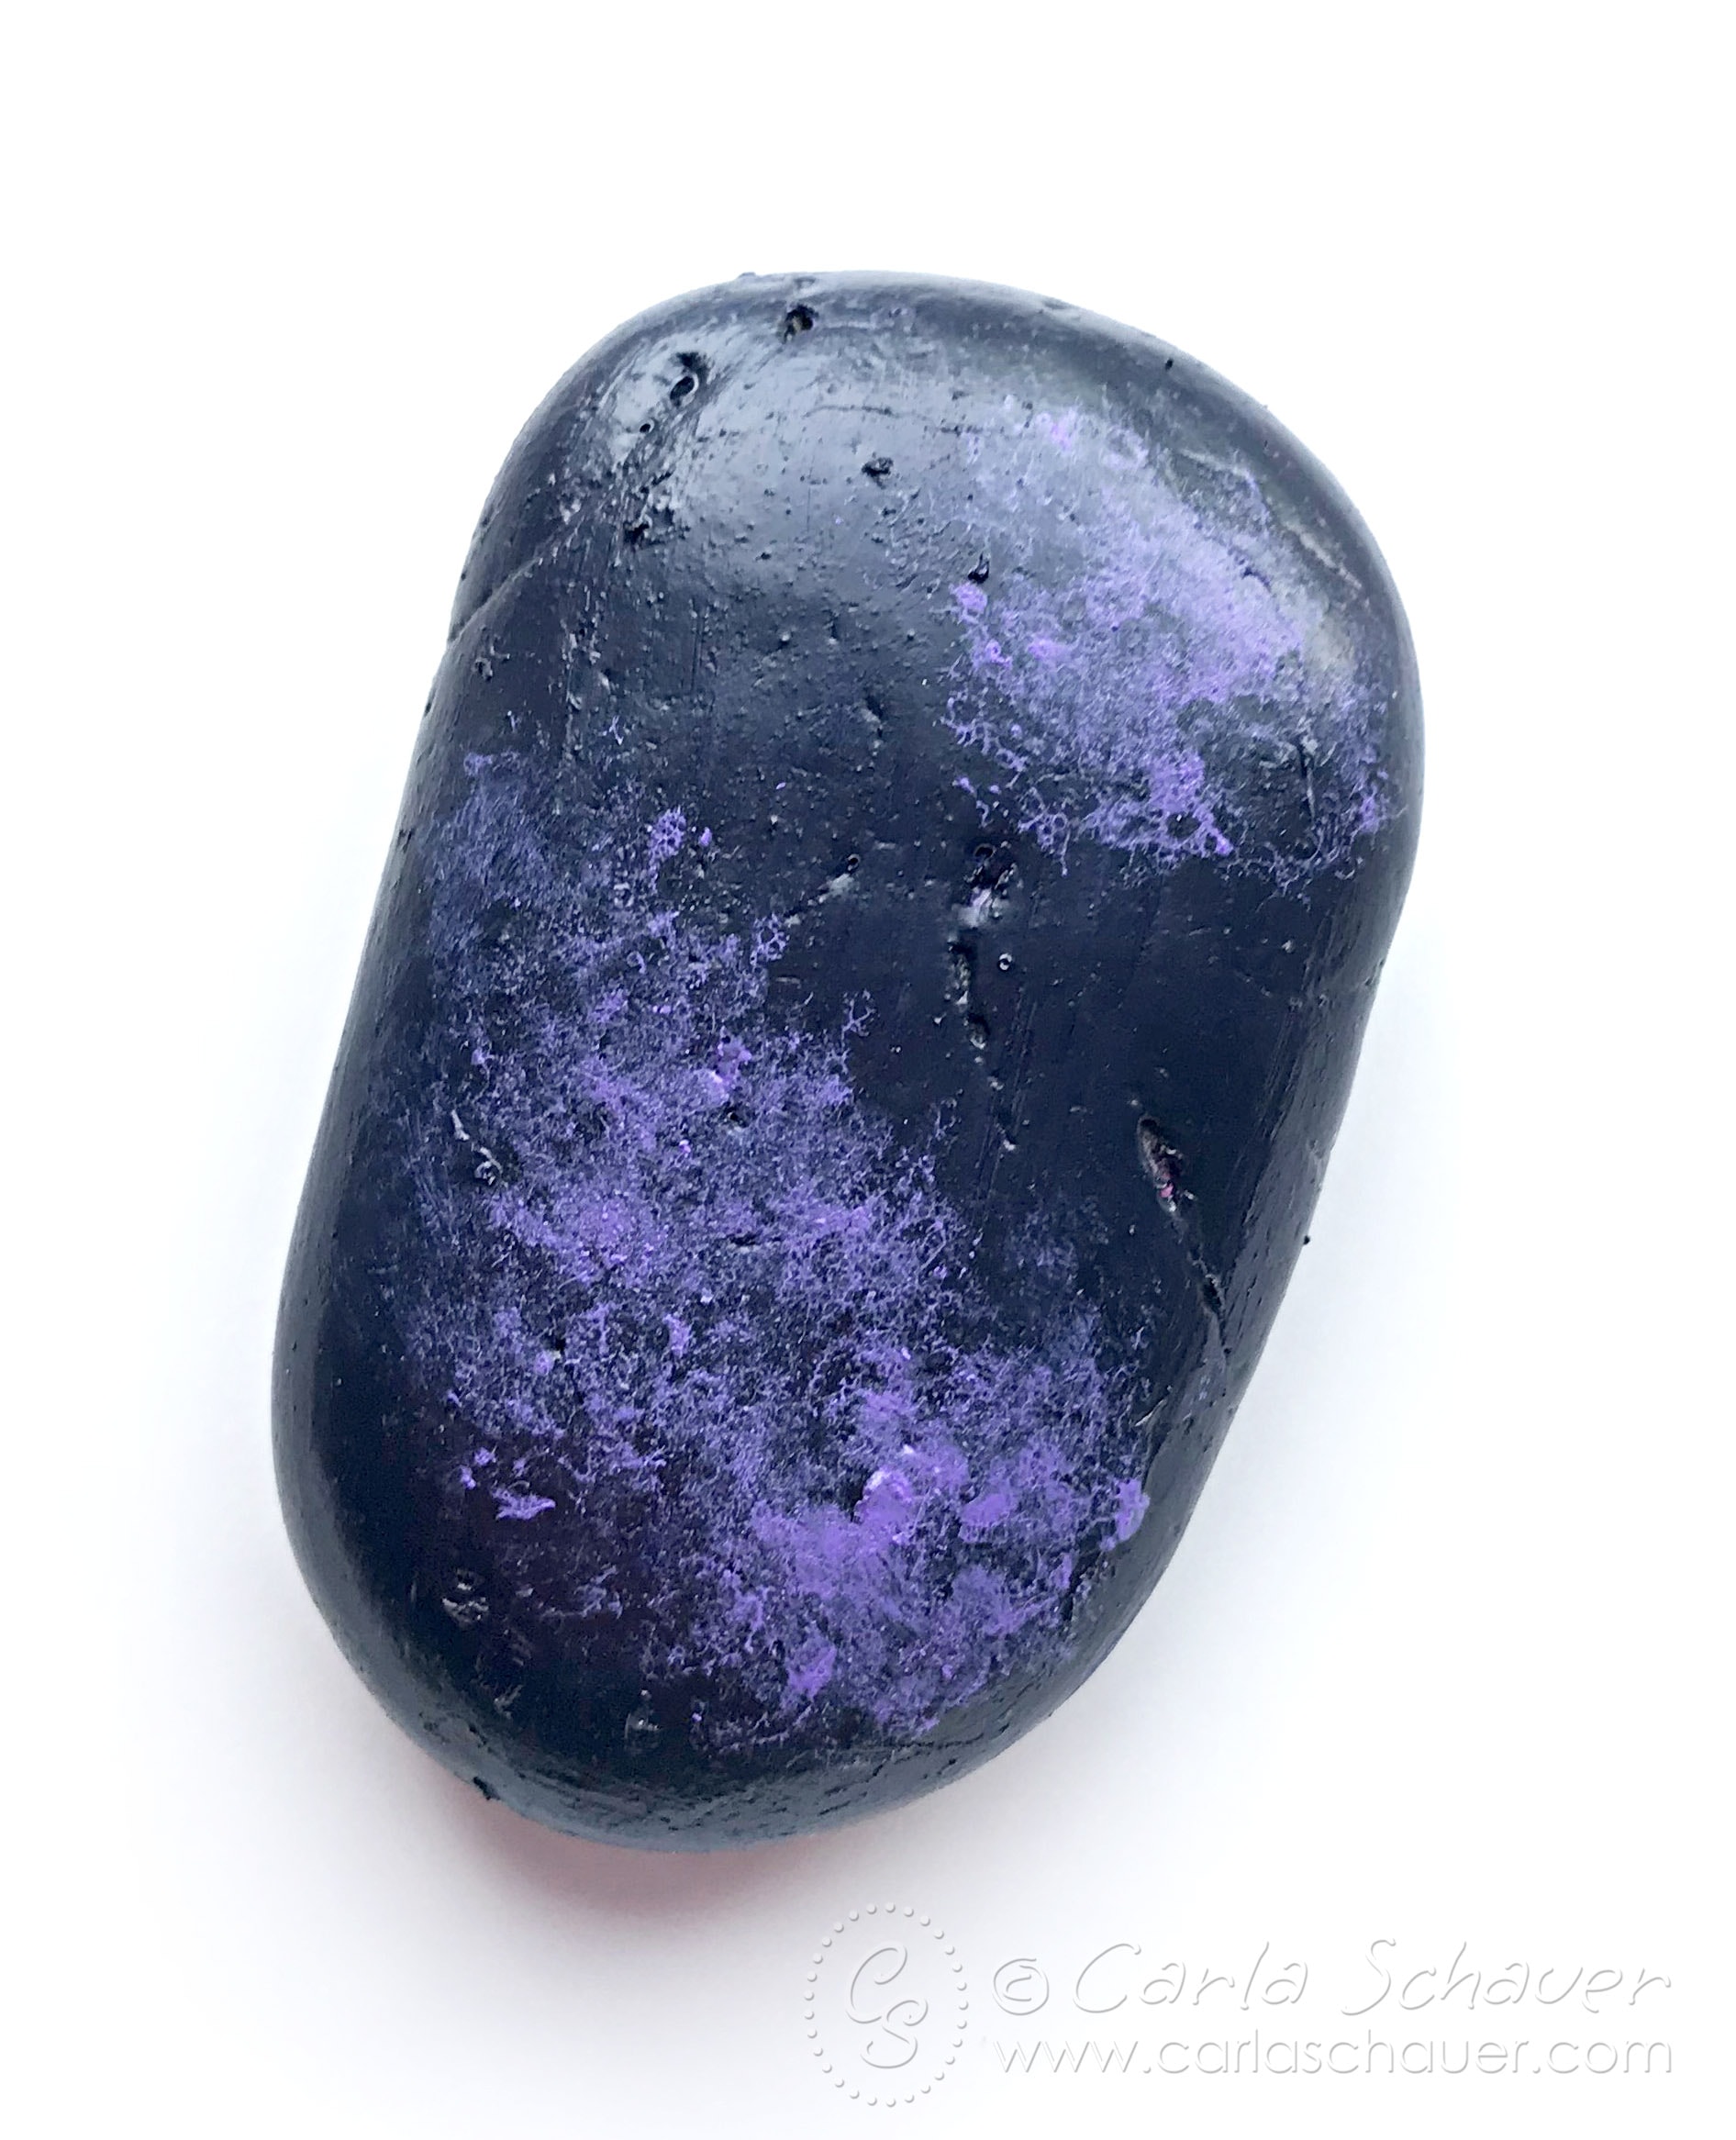 Black rock with purple sponge painting, on white backgroun